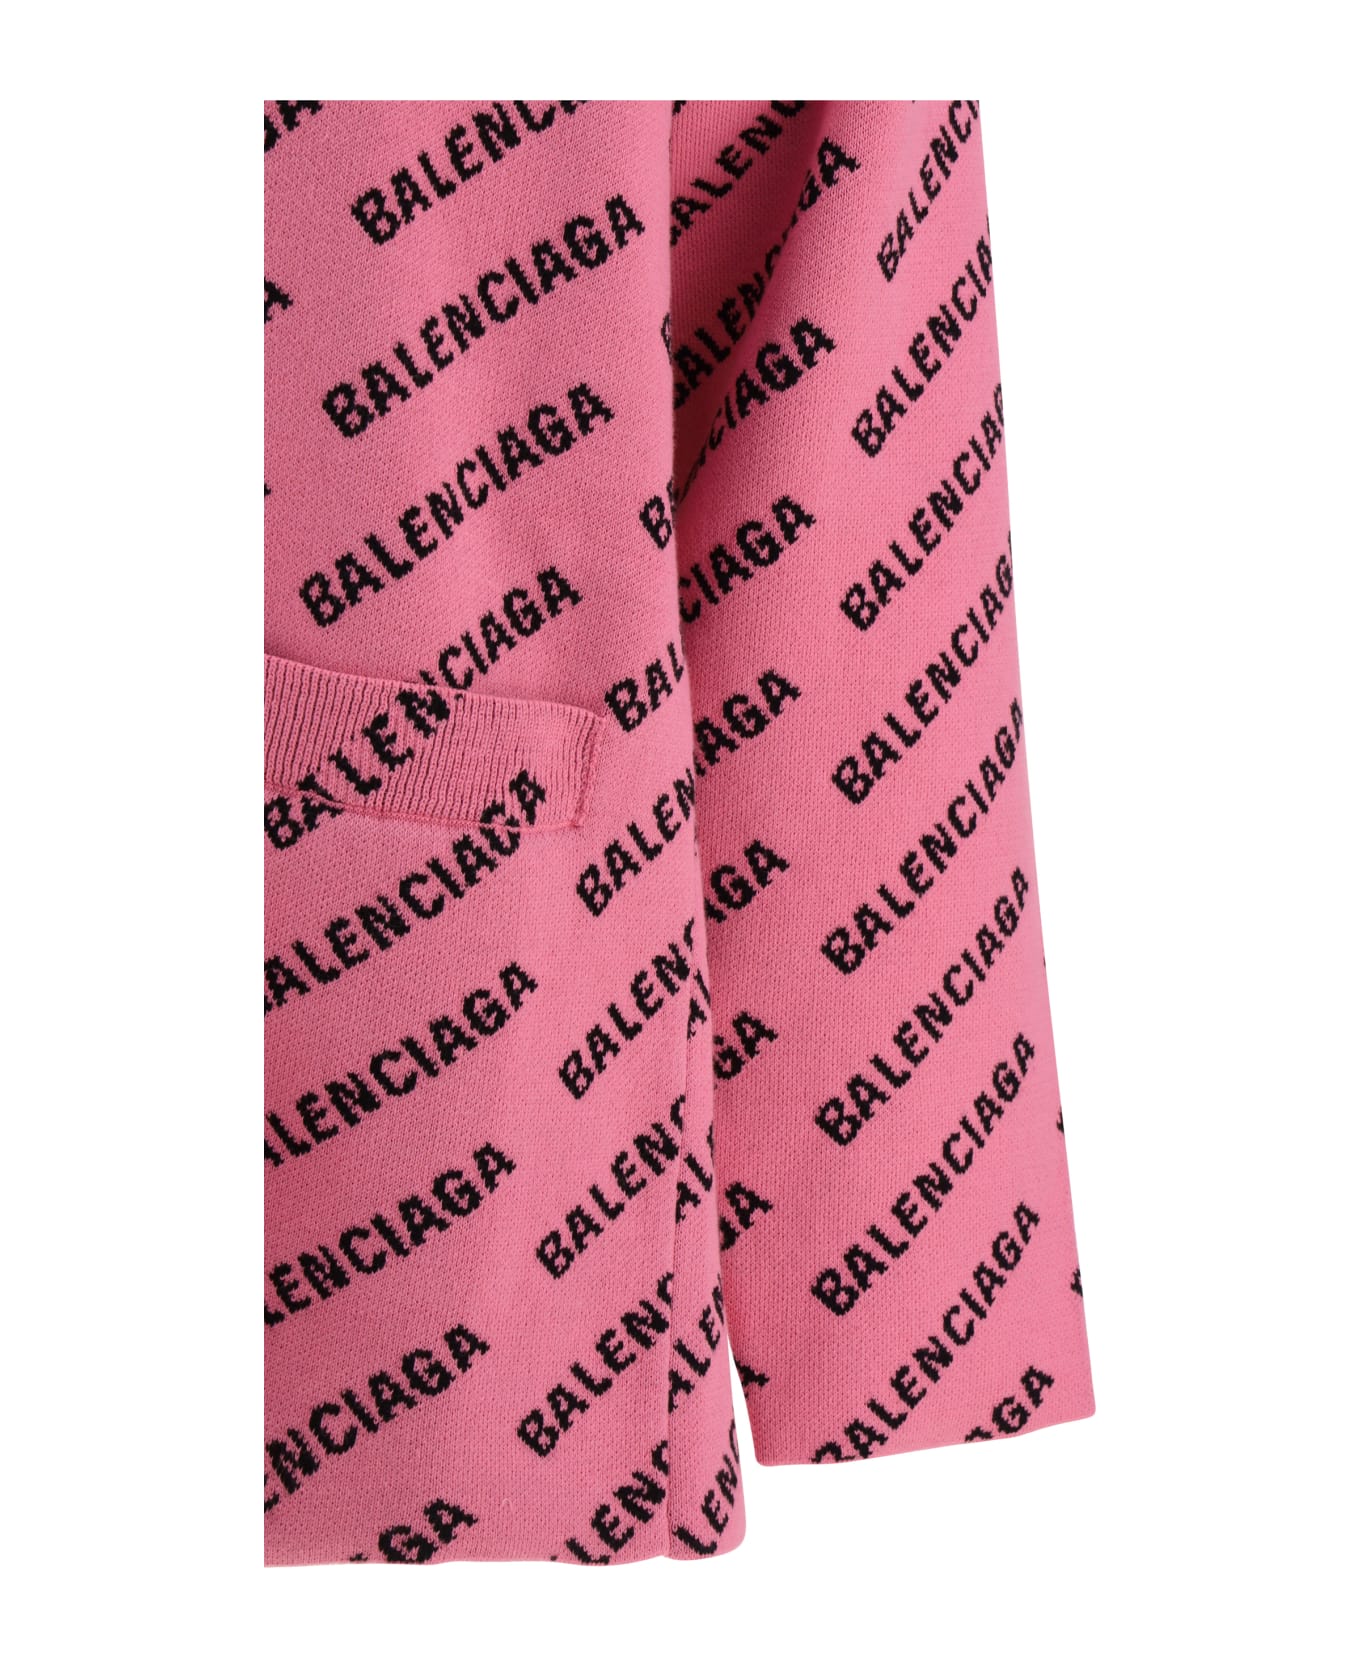 Balenciaga Cardigan - Pink/black